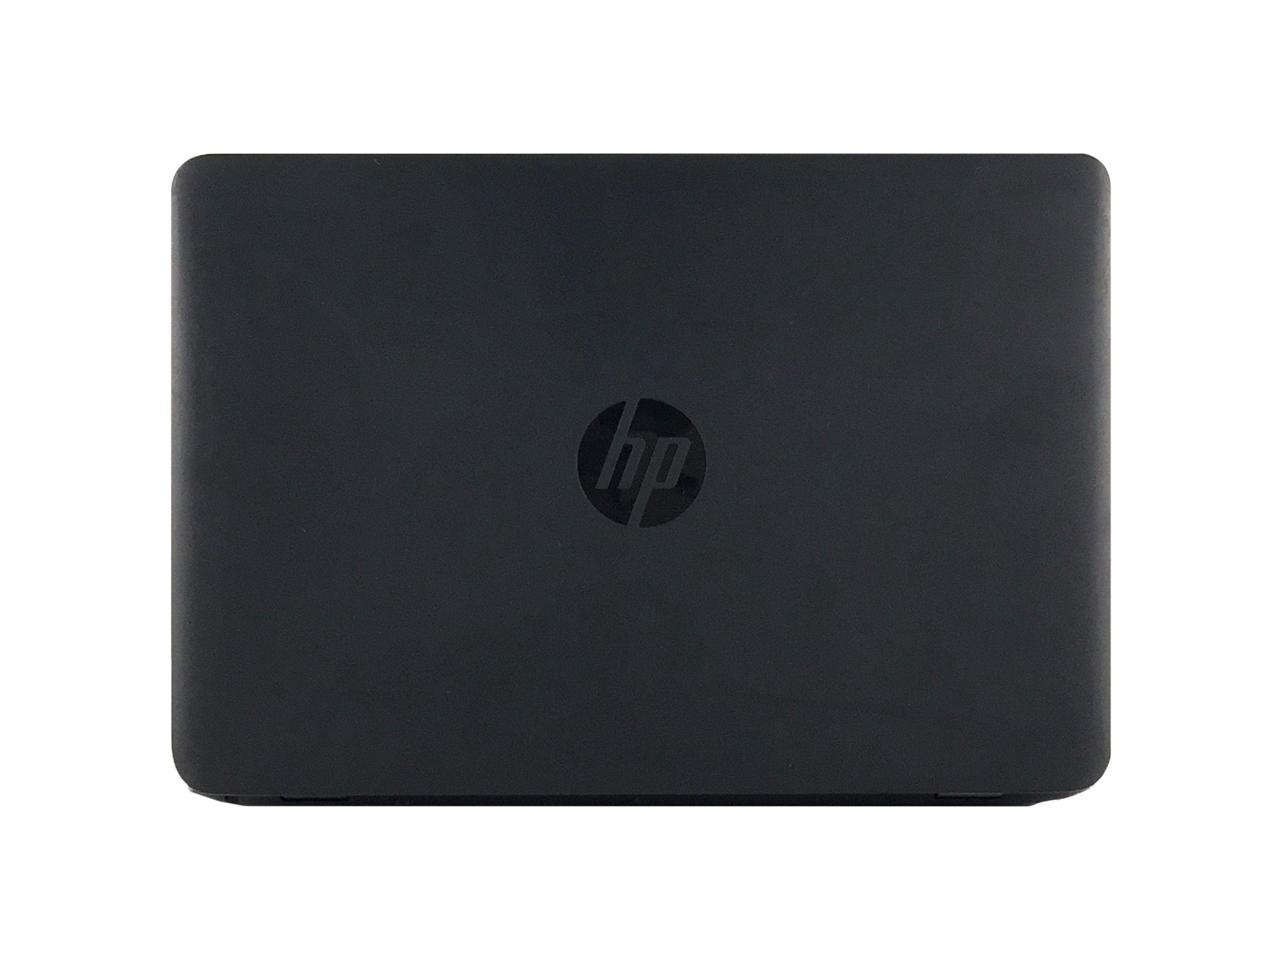 HP Grade A Elitebook 840G2 14.0" Laptop Intel Core i5 5th Gen 5300U (2.30 GHz) 16 GB DDR3L 256 GB SSD WIFI Windows 10 Home 64 bits (Multi-language) 1 Year Warranty